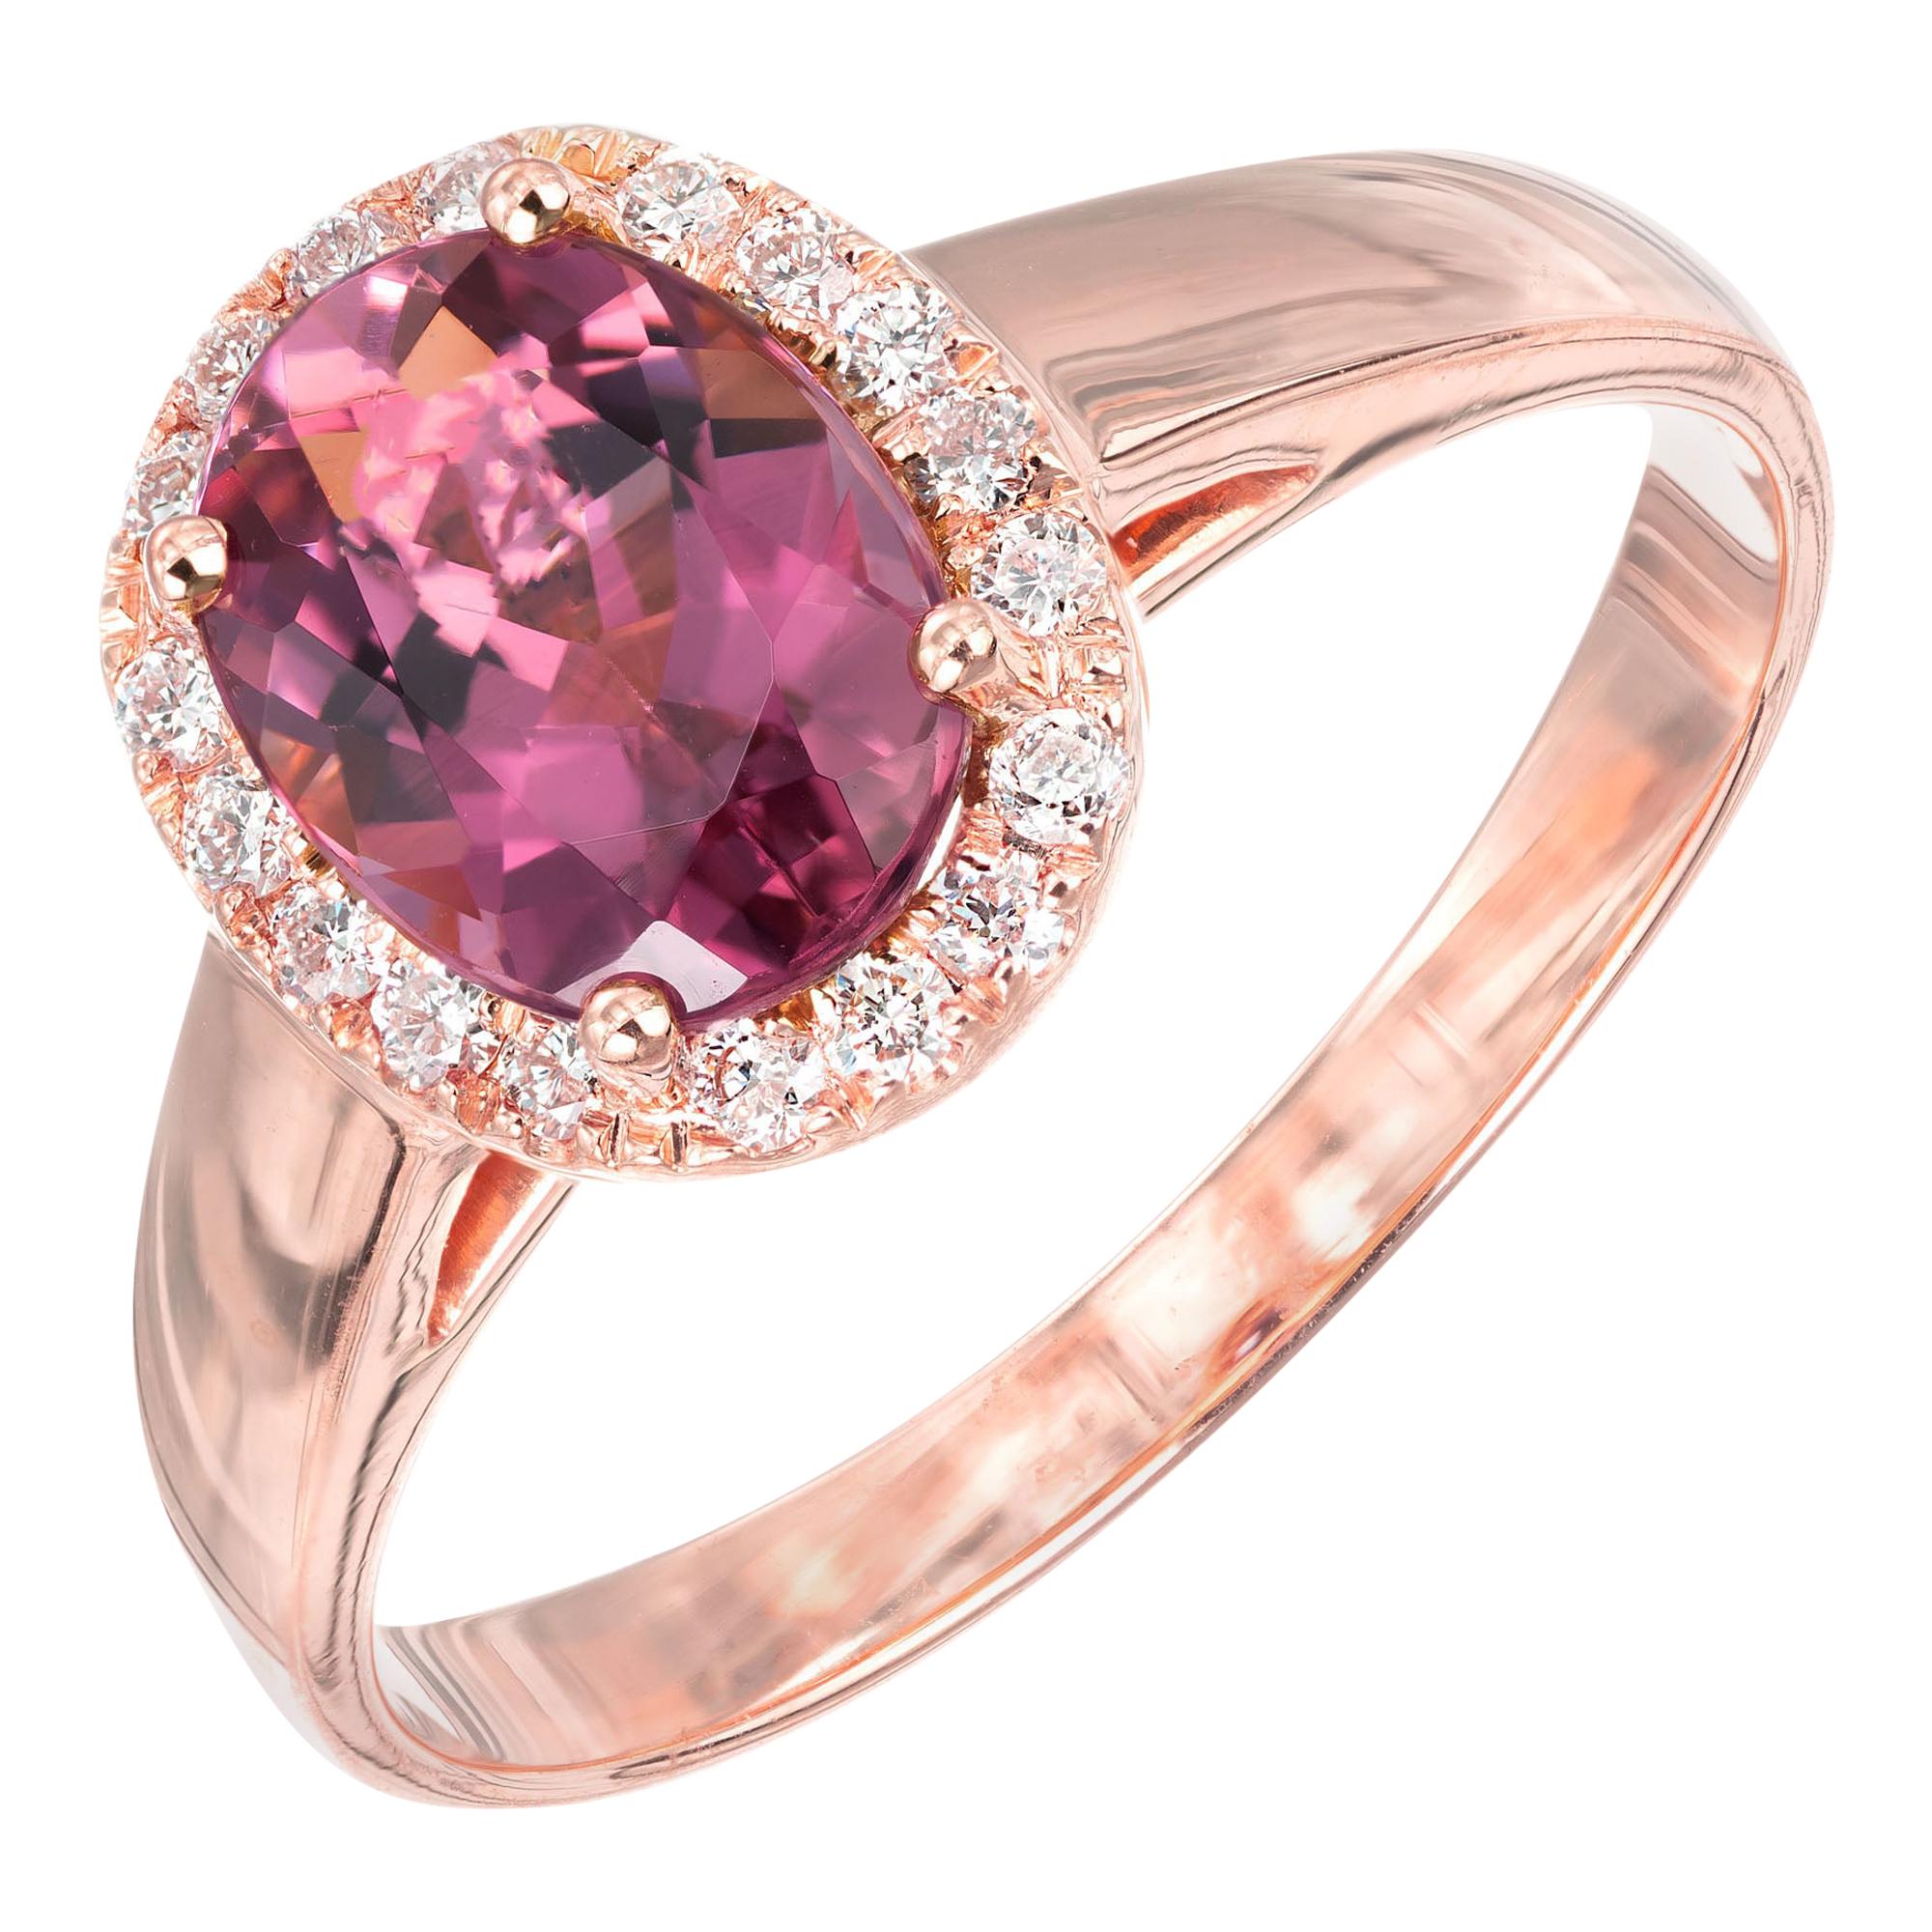 Peter Suchy 1.20 Carat Pink Tourmaline Diamond Halo Rose Gold Engagement Ring